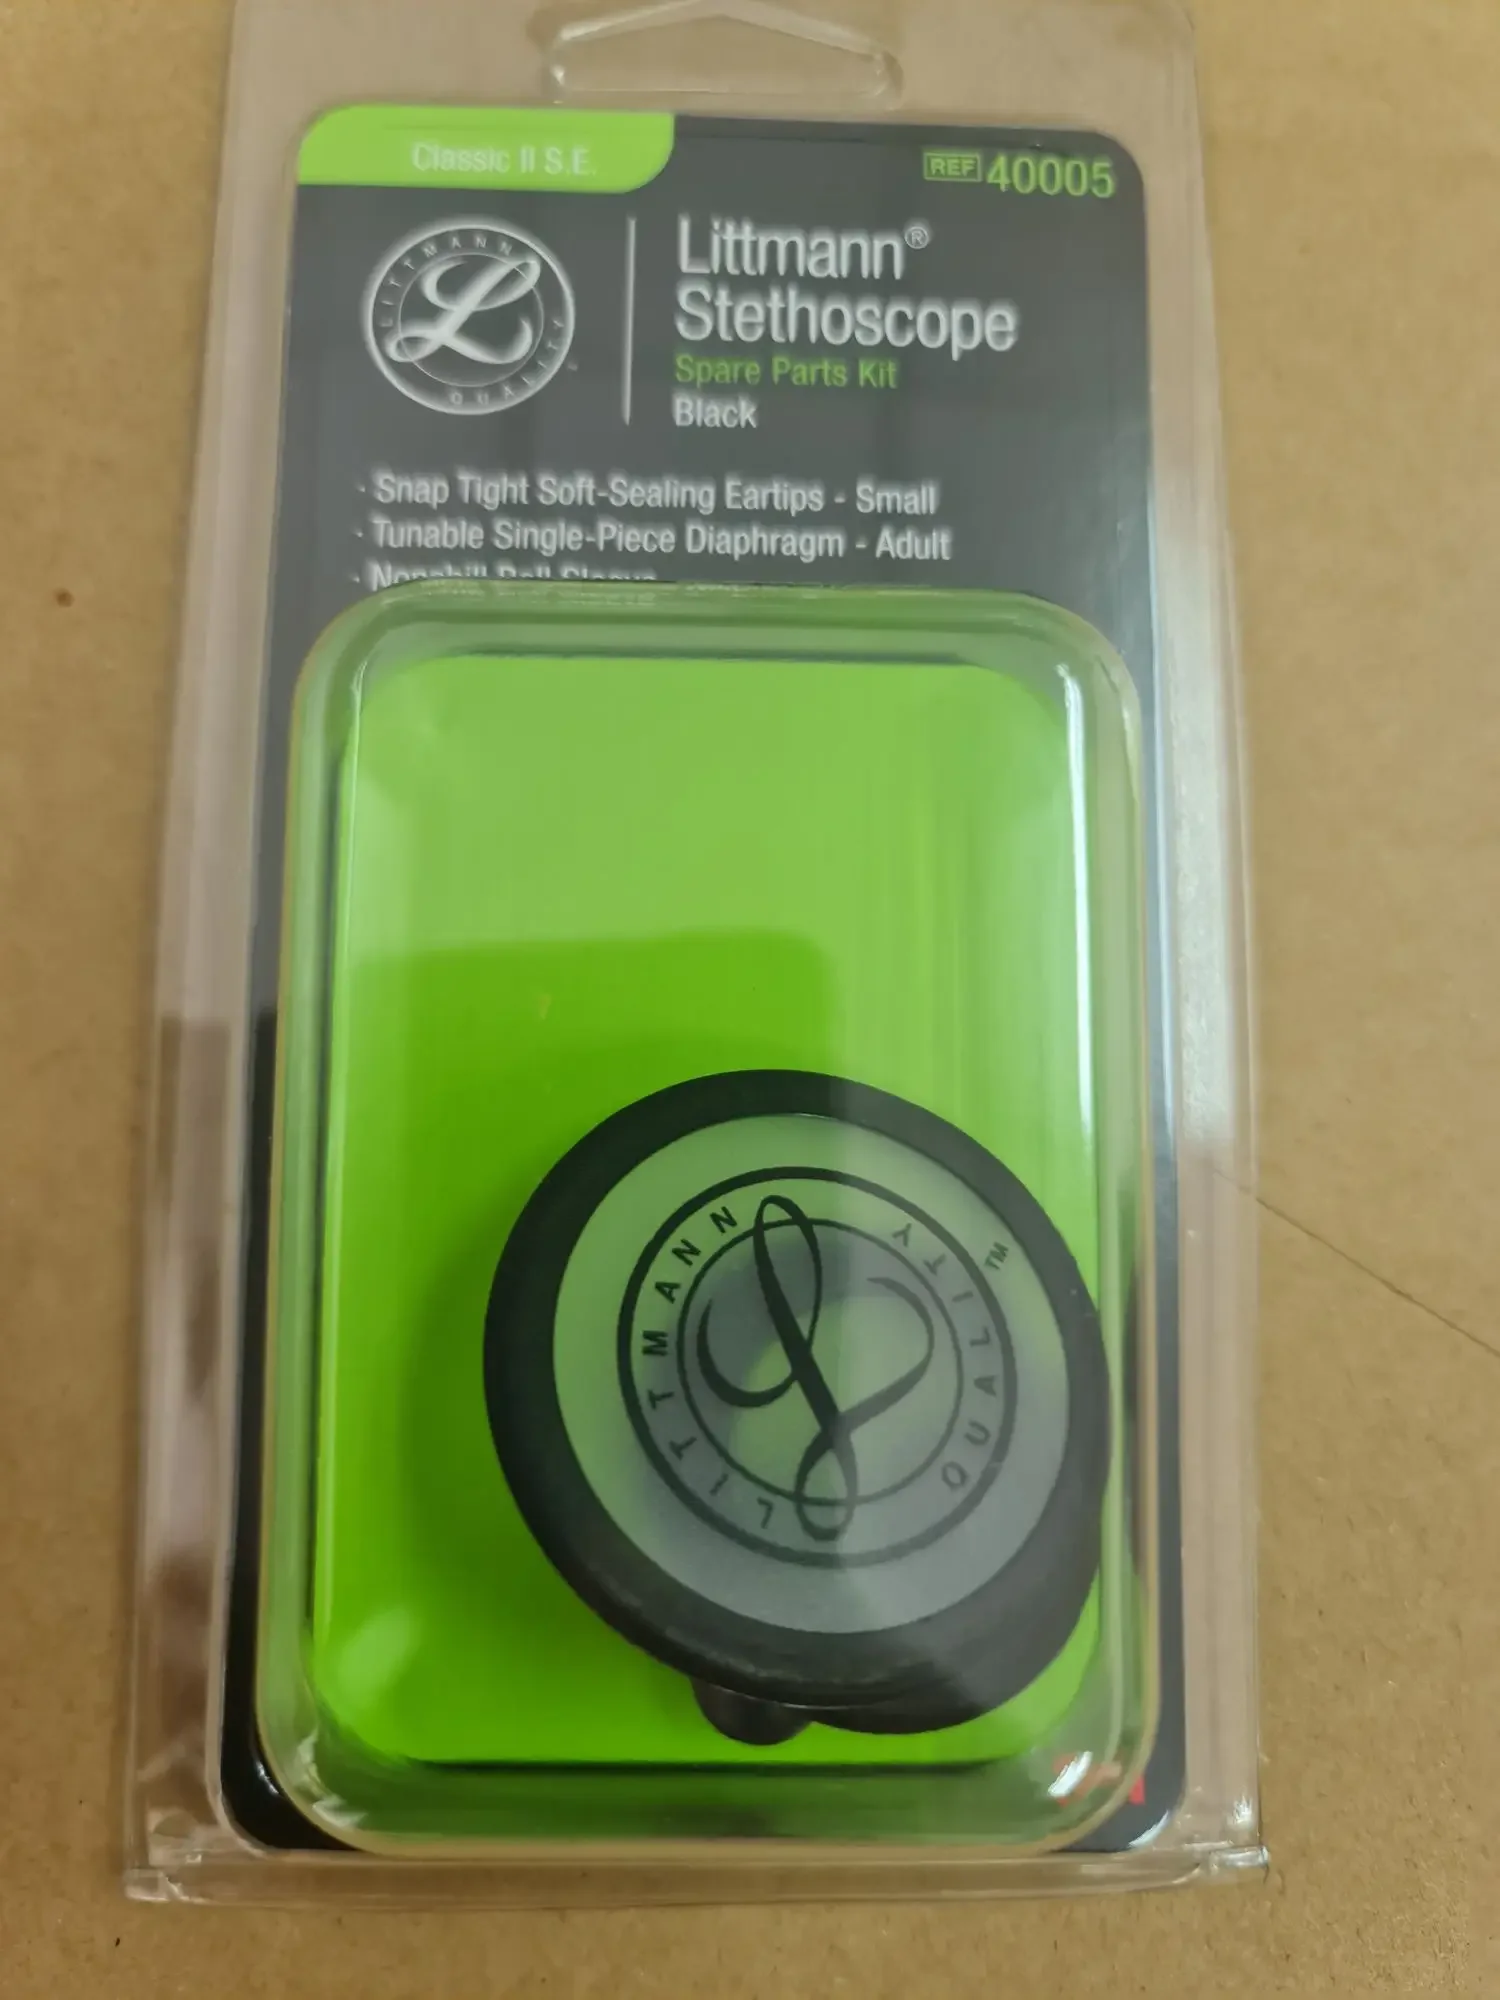 Littmann Stethoscope Spare Part Kit, Classic II S.E Black, 40005